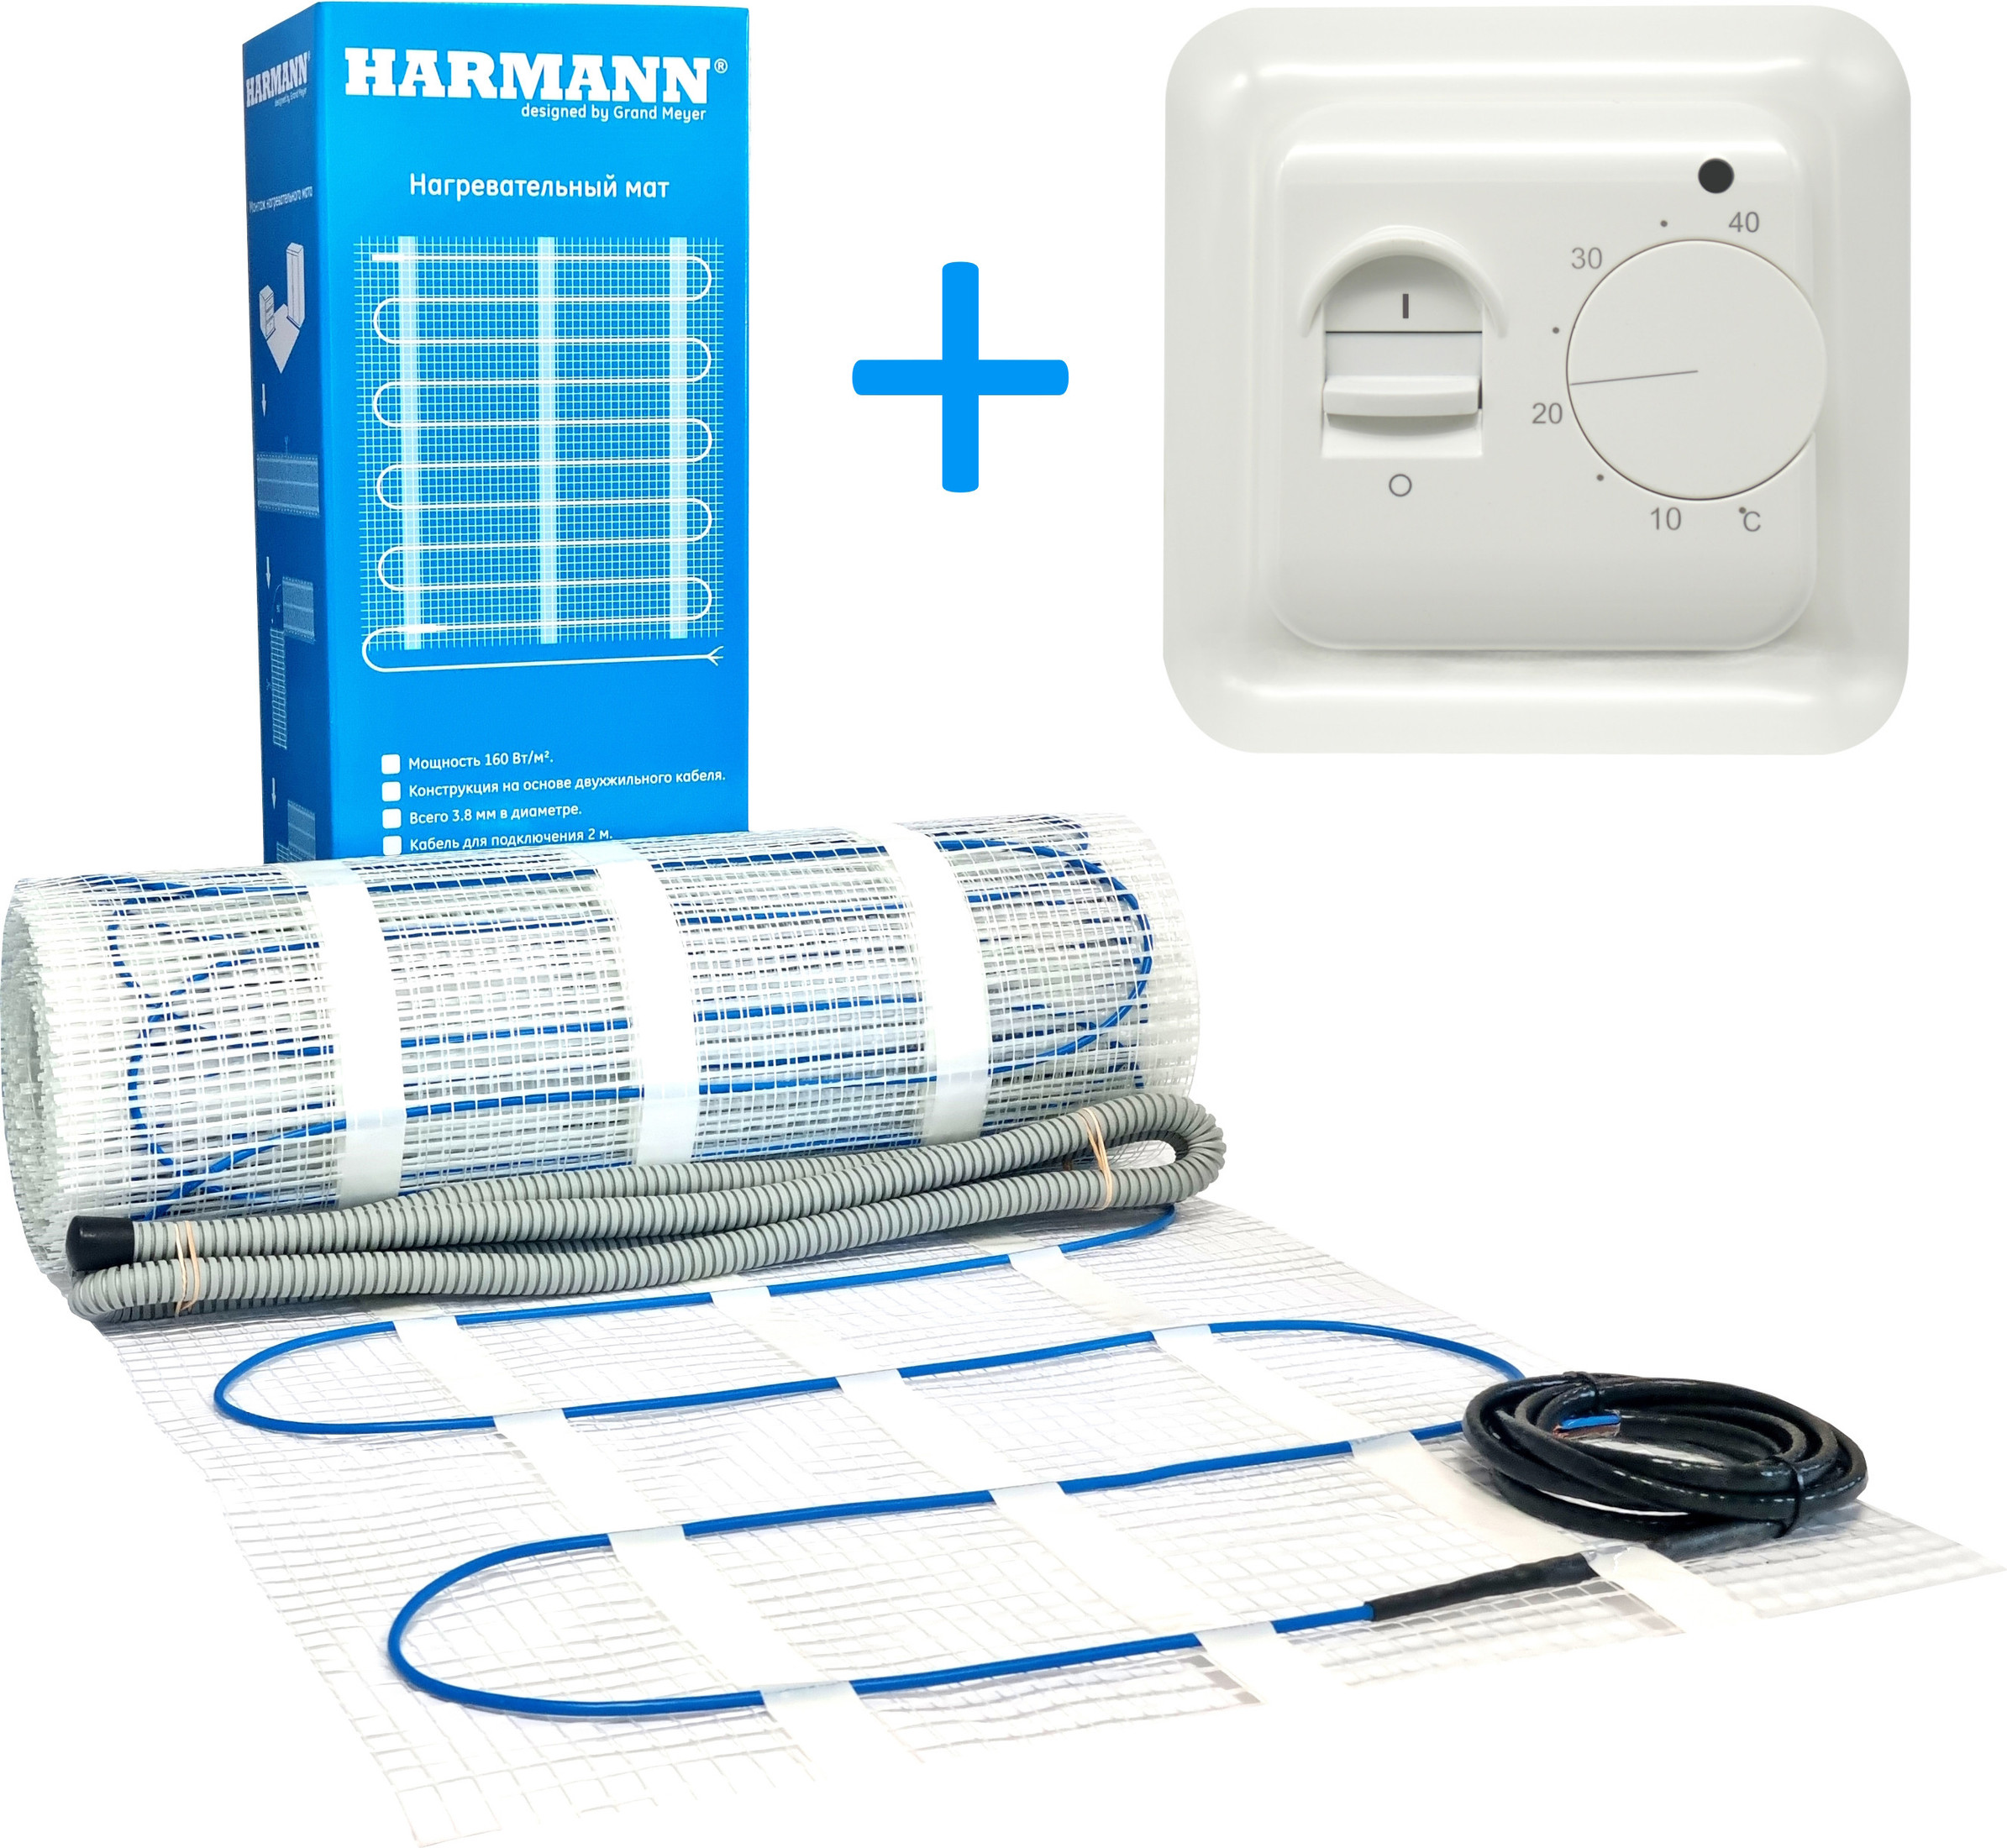 

Нагревательный мат Harmann W160-050 5 кв.м. 800 Вт (с терморегулятором MST-1)